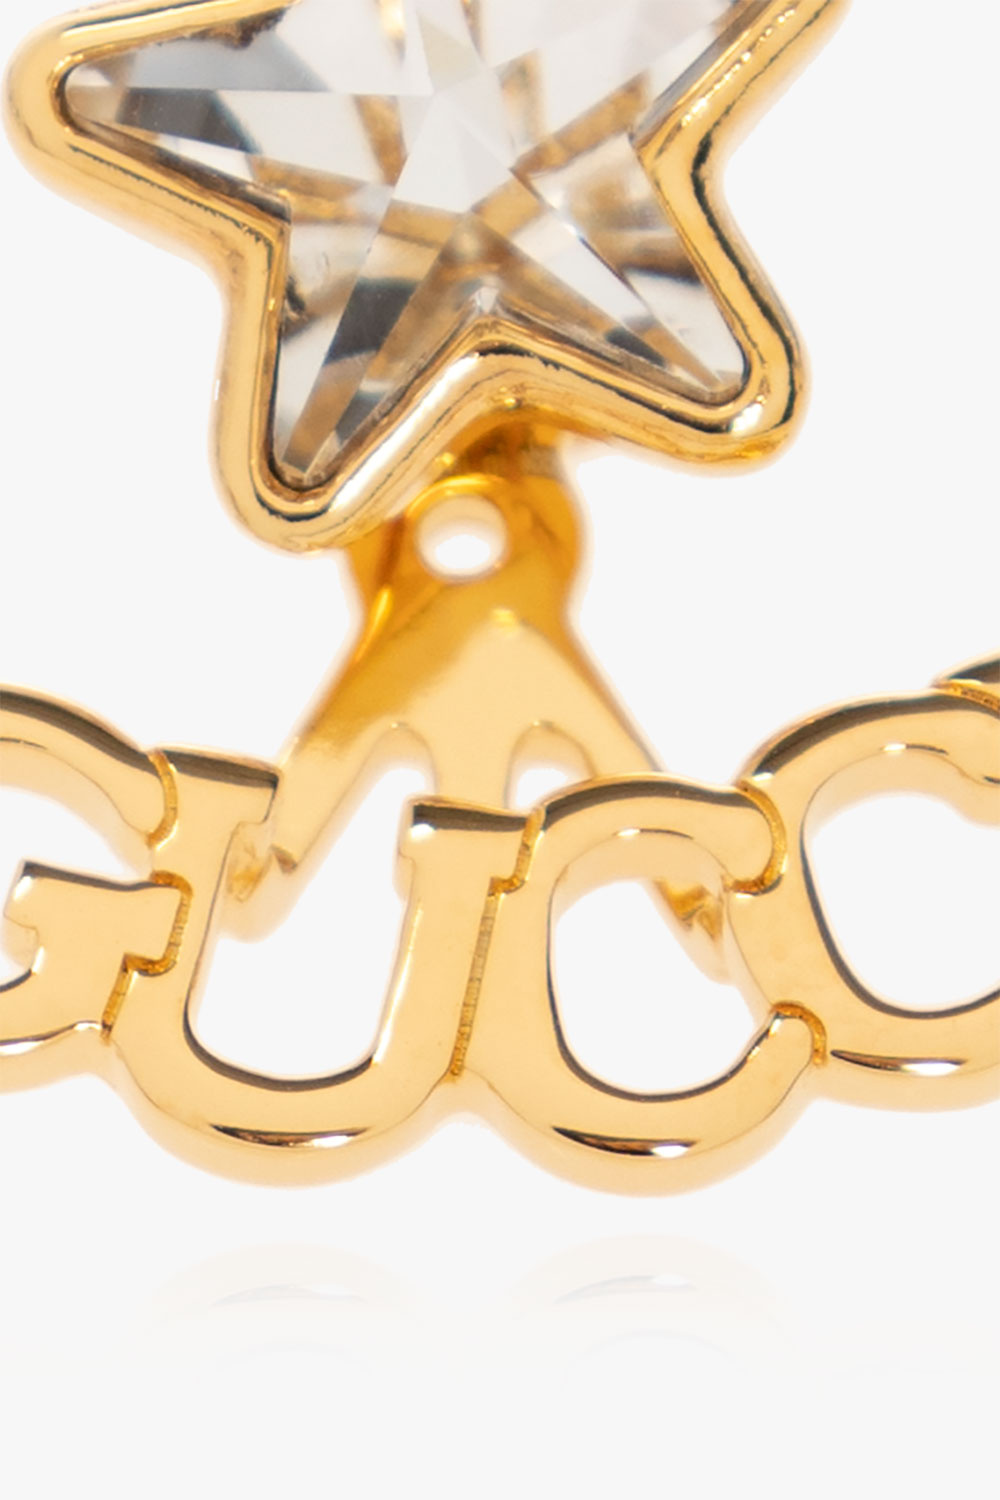 Gucci Gucci platforms shown for fall